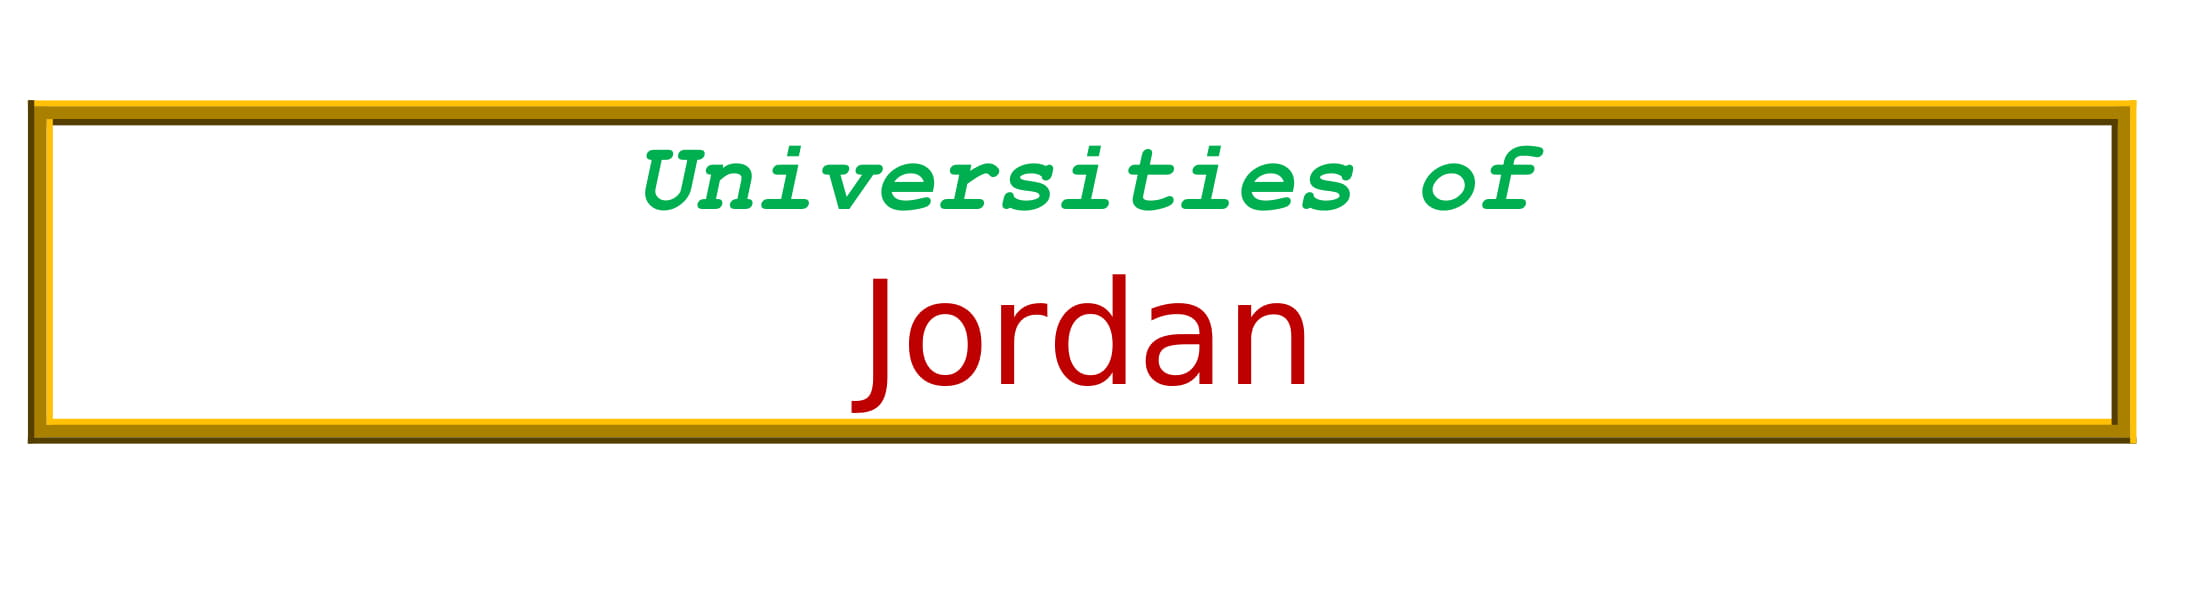 Universities in Jordan